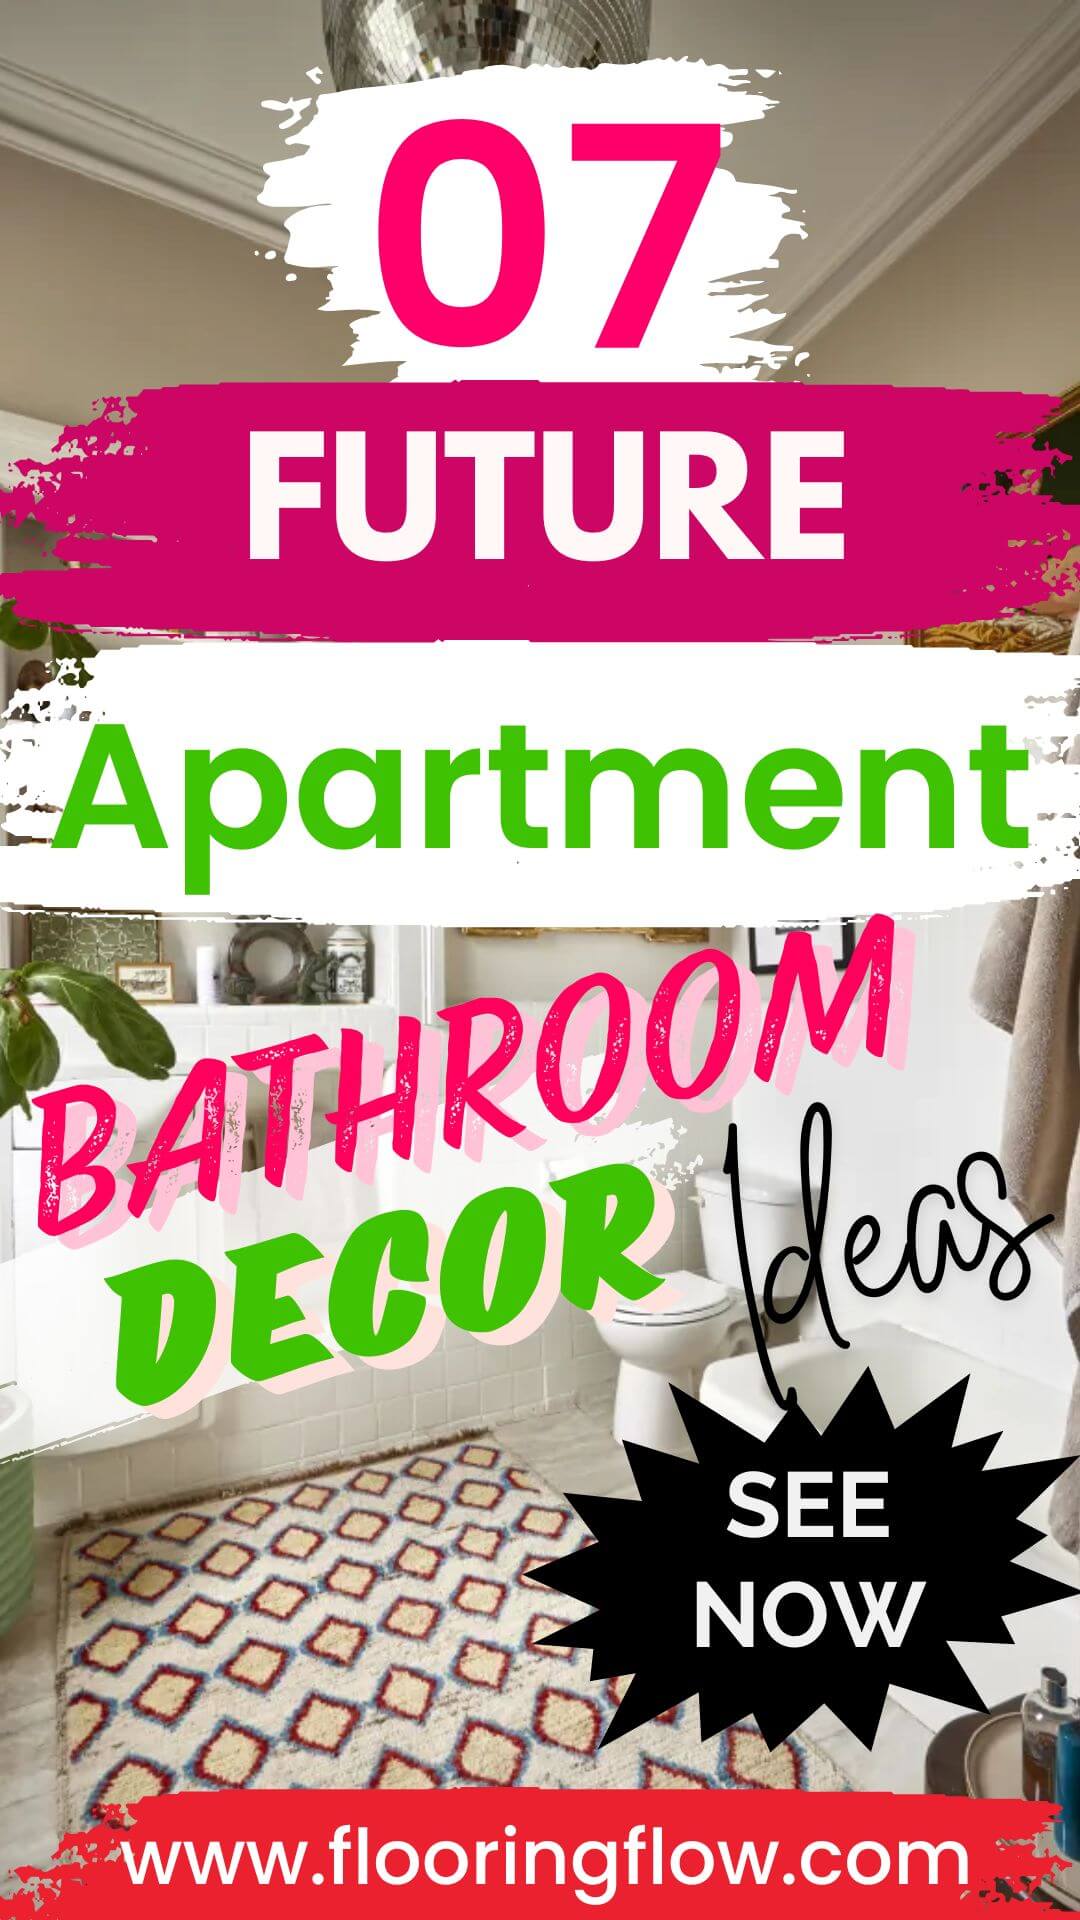 Future Apartment Decor Ideas For Small Bathroom